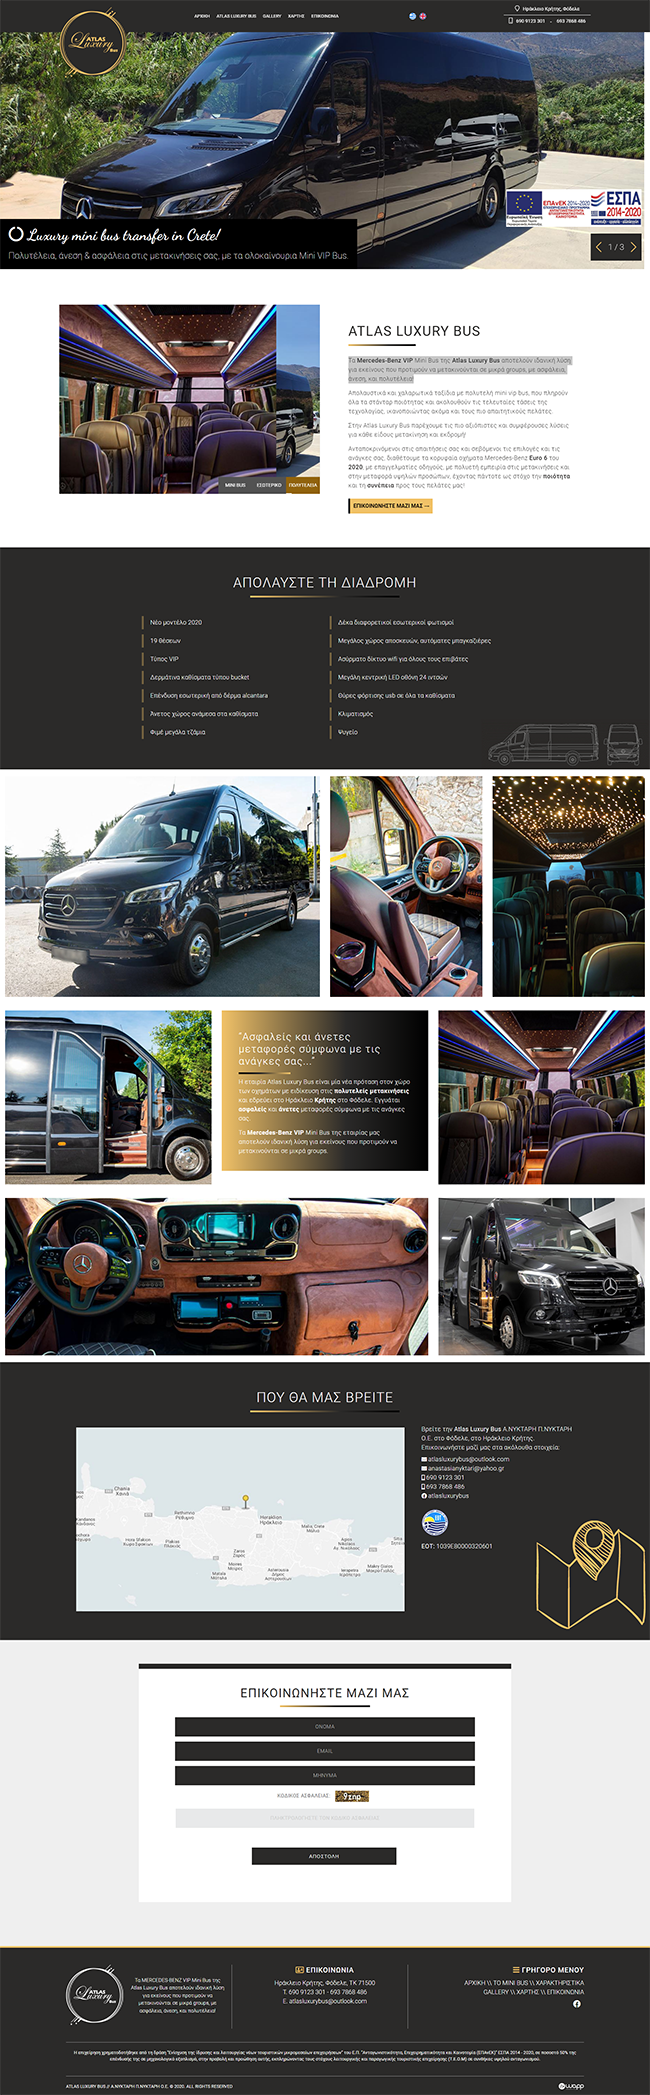 Responsive ιστοσελίδα για την Atlas Luxury Bus στην Κρήτη